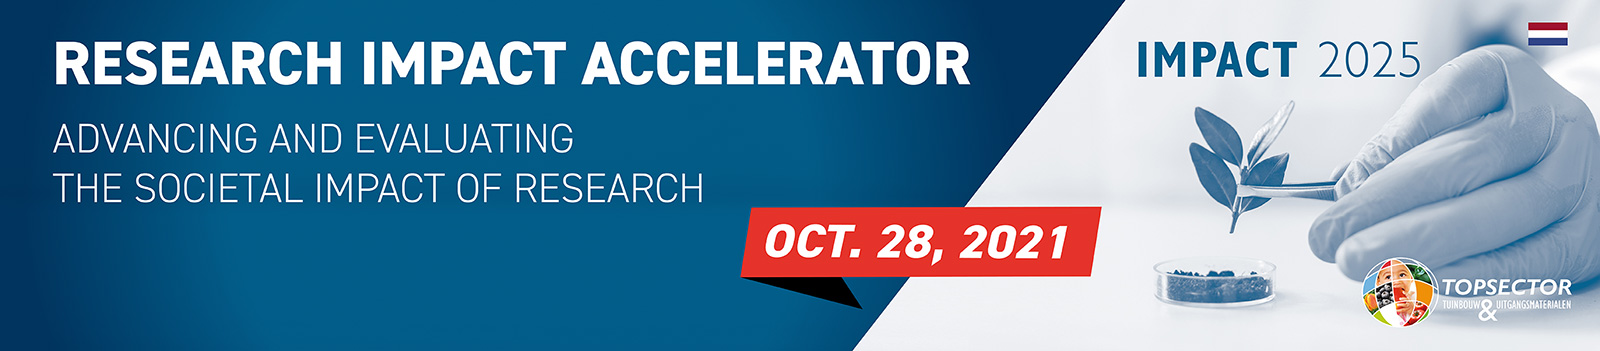 IMPACT2025-ResearchImpactAccelerator-website-banner